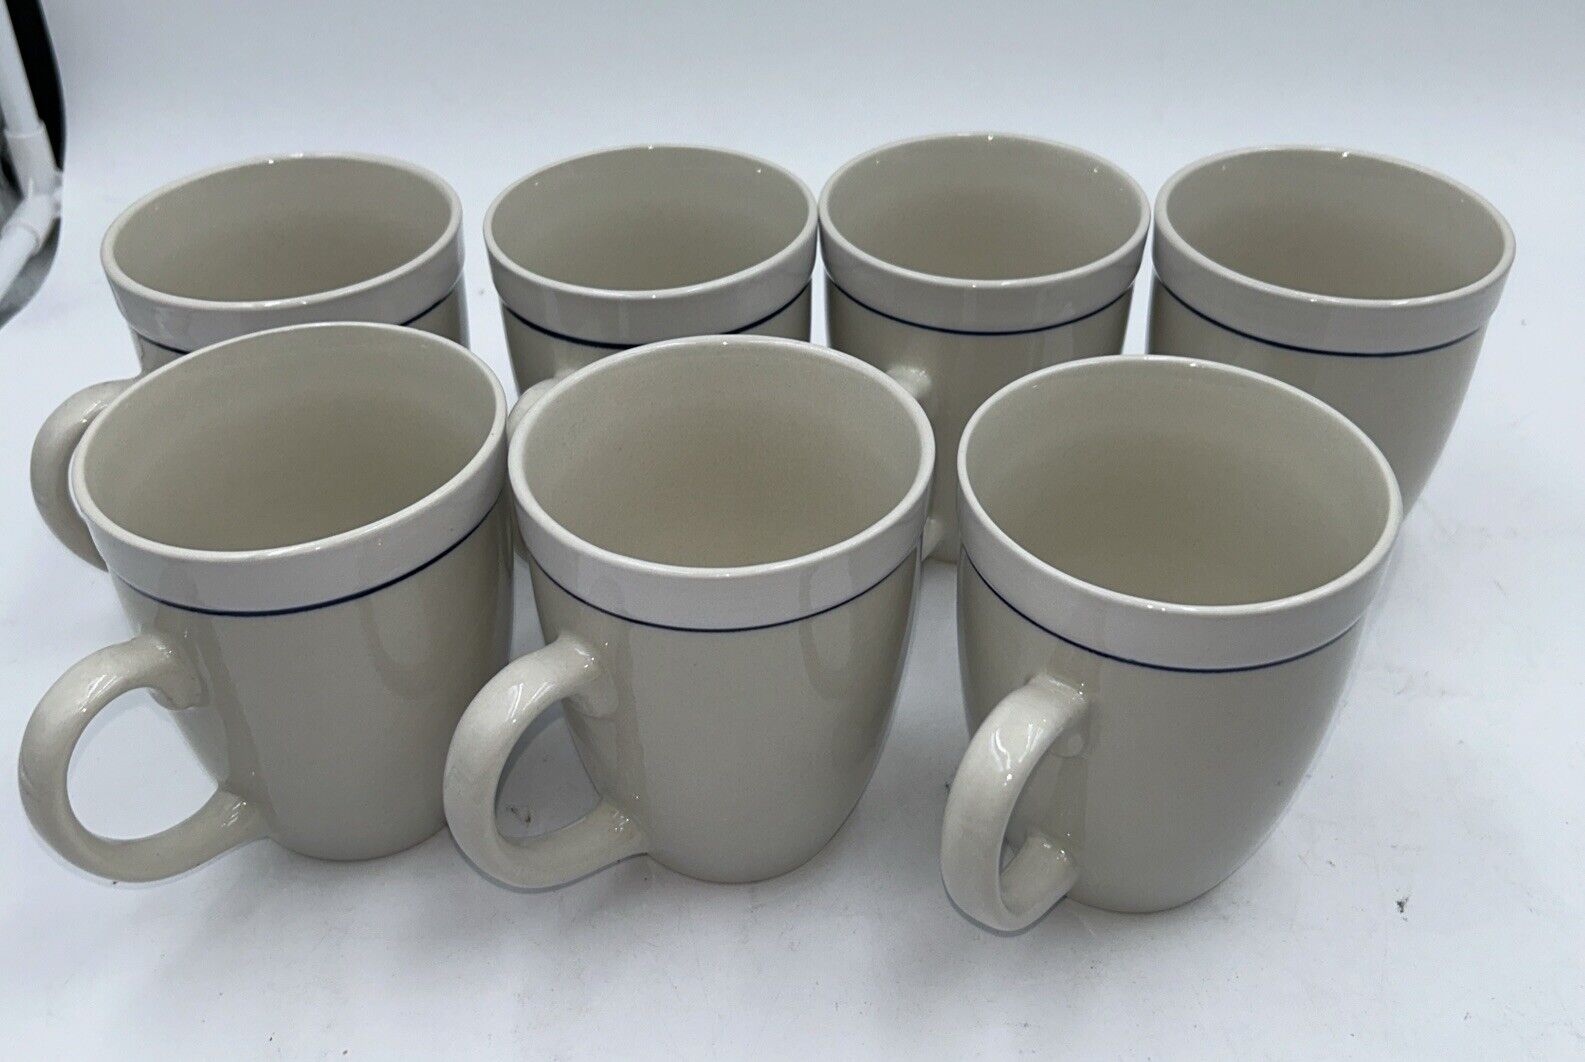 Gibson Housewares Back To Basics White Coffee Mug/Cup Beige, Ivory, Navy Stripe